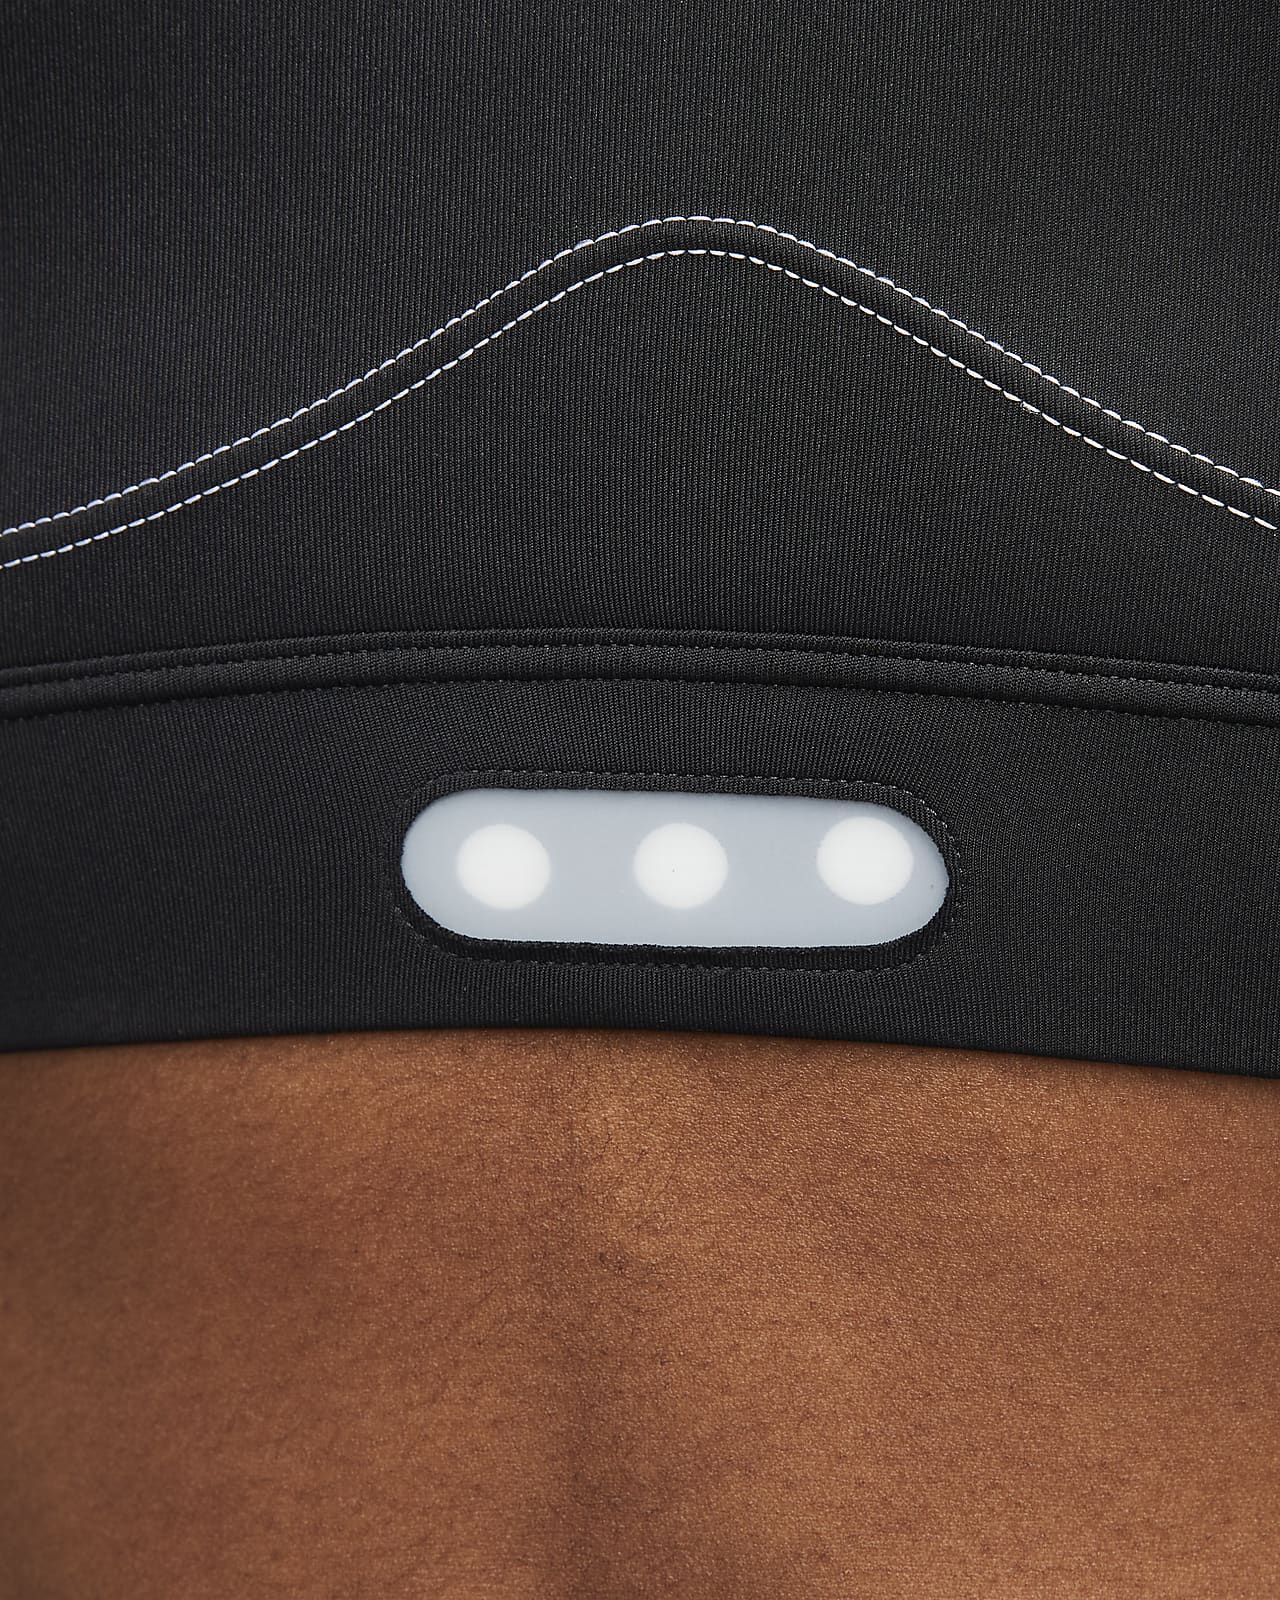 Nike Swoosh Air Max Women's Medium-Support Lightly Lined Cutout Sports Bra.